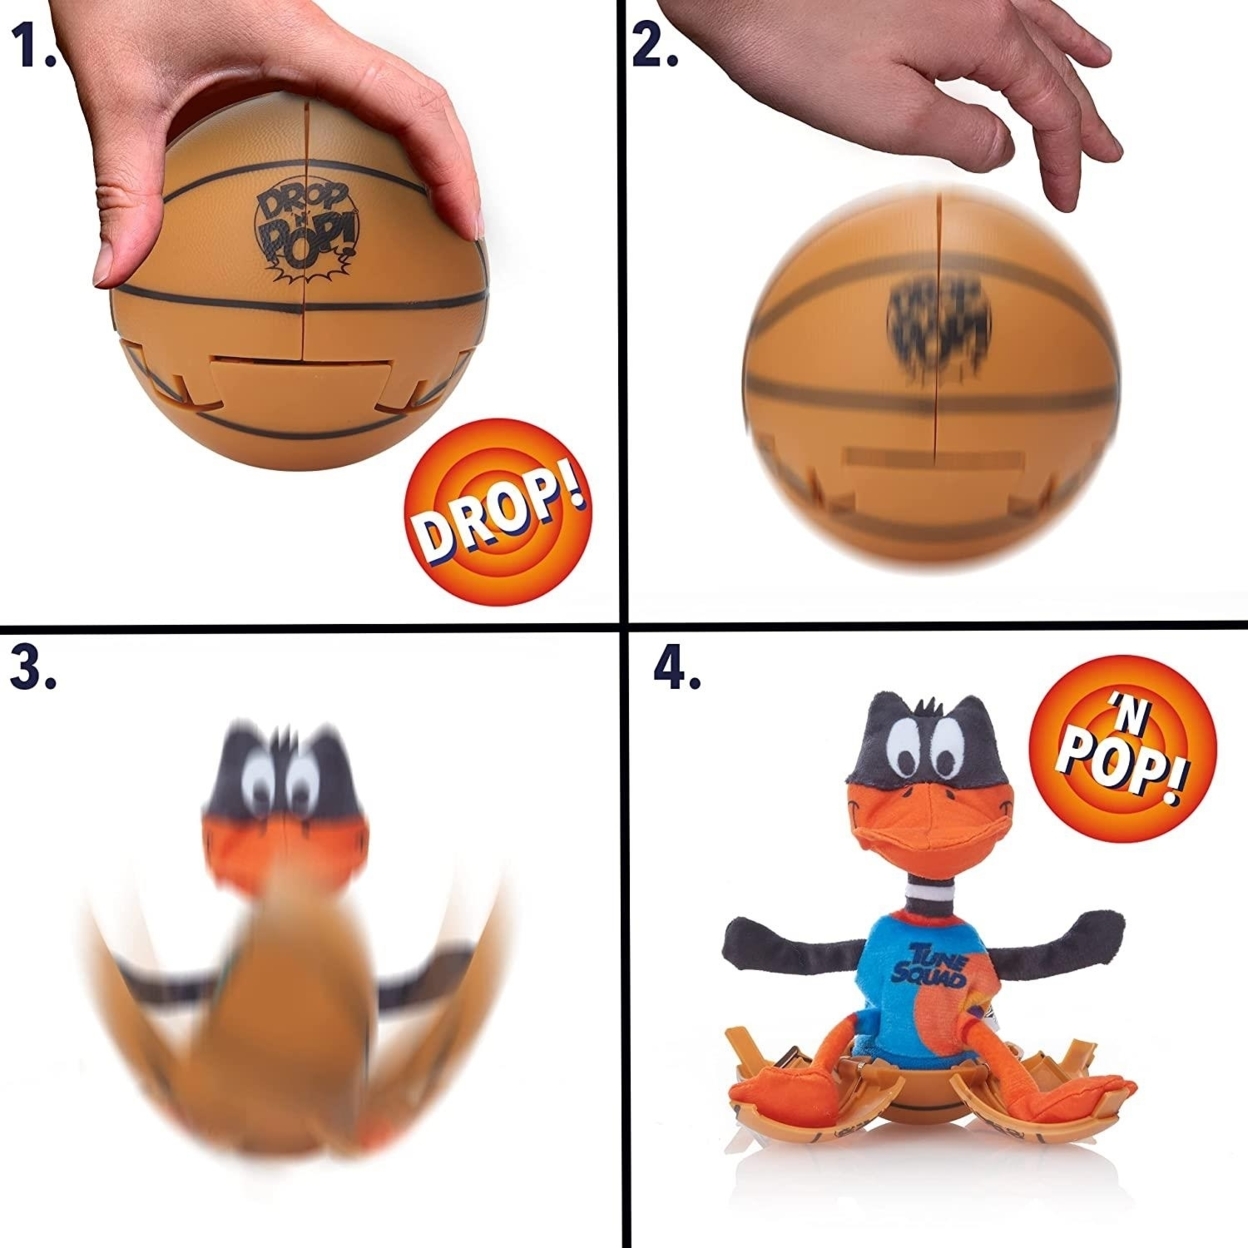 Space Jam A New Legacy Daffy Duck Plush Drop 'n Pop Basketball Kids Interactive Toy WOW! Stuff